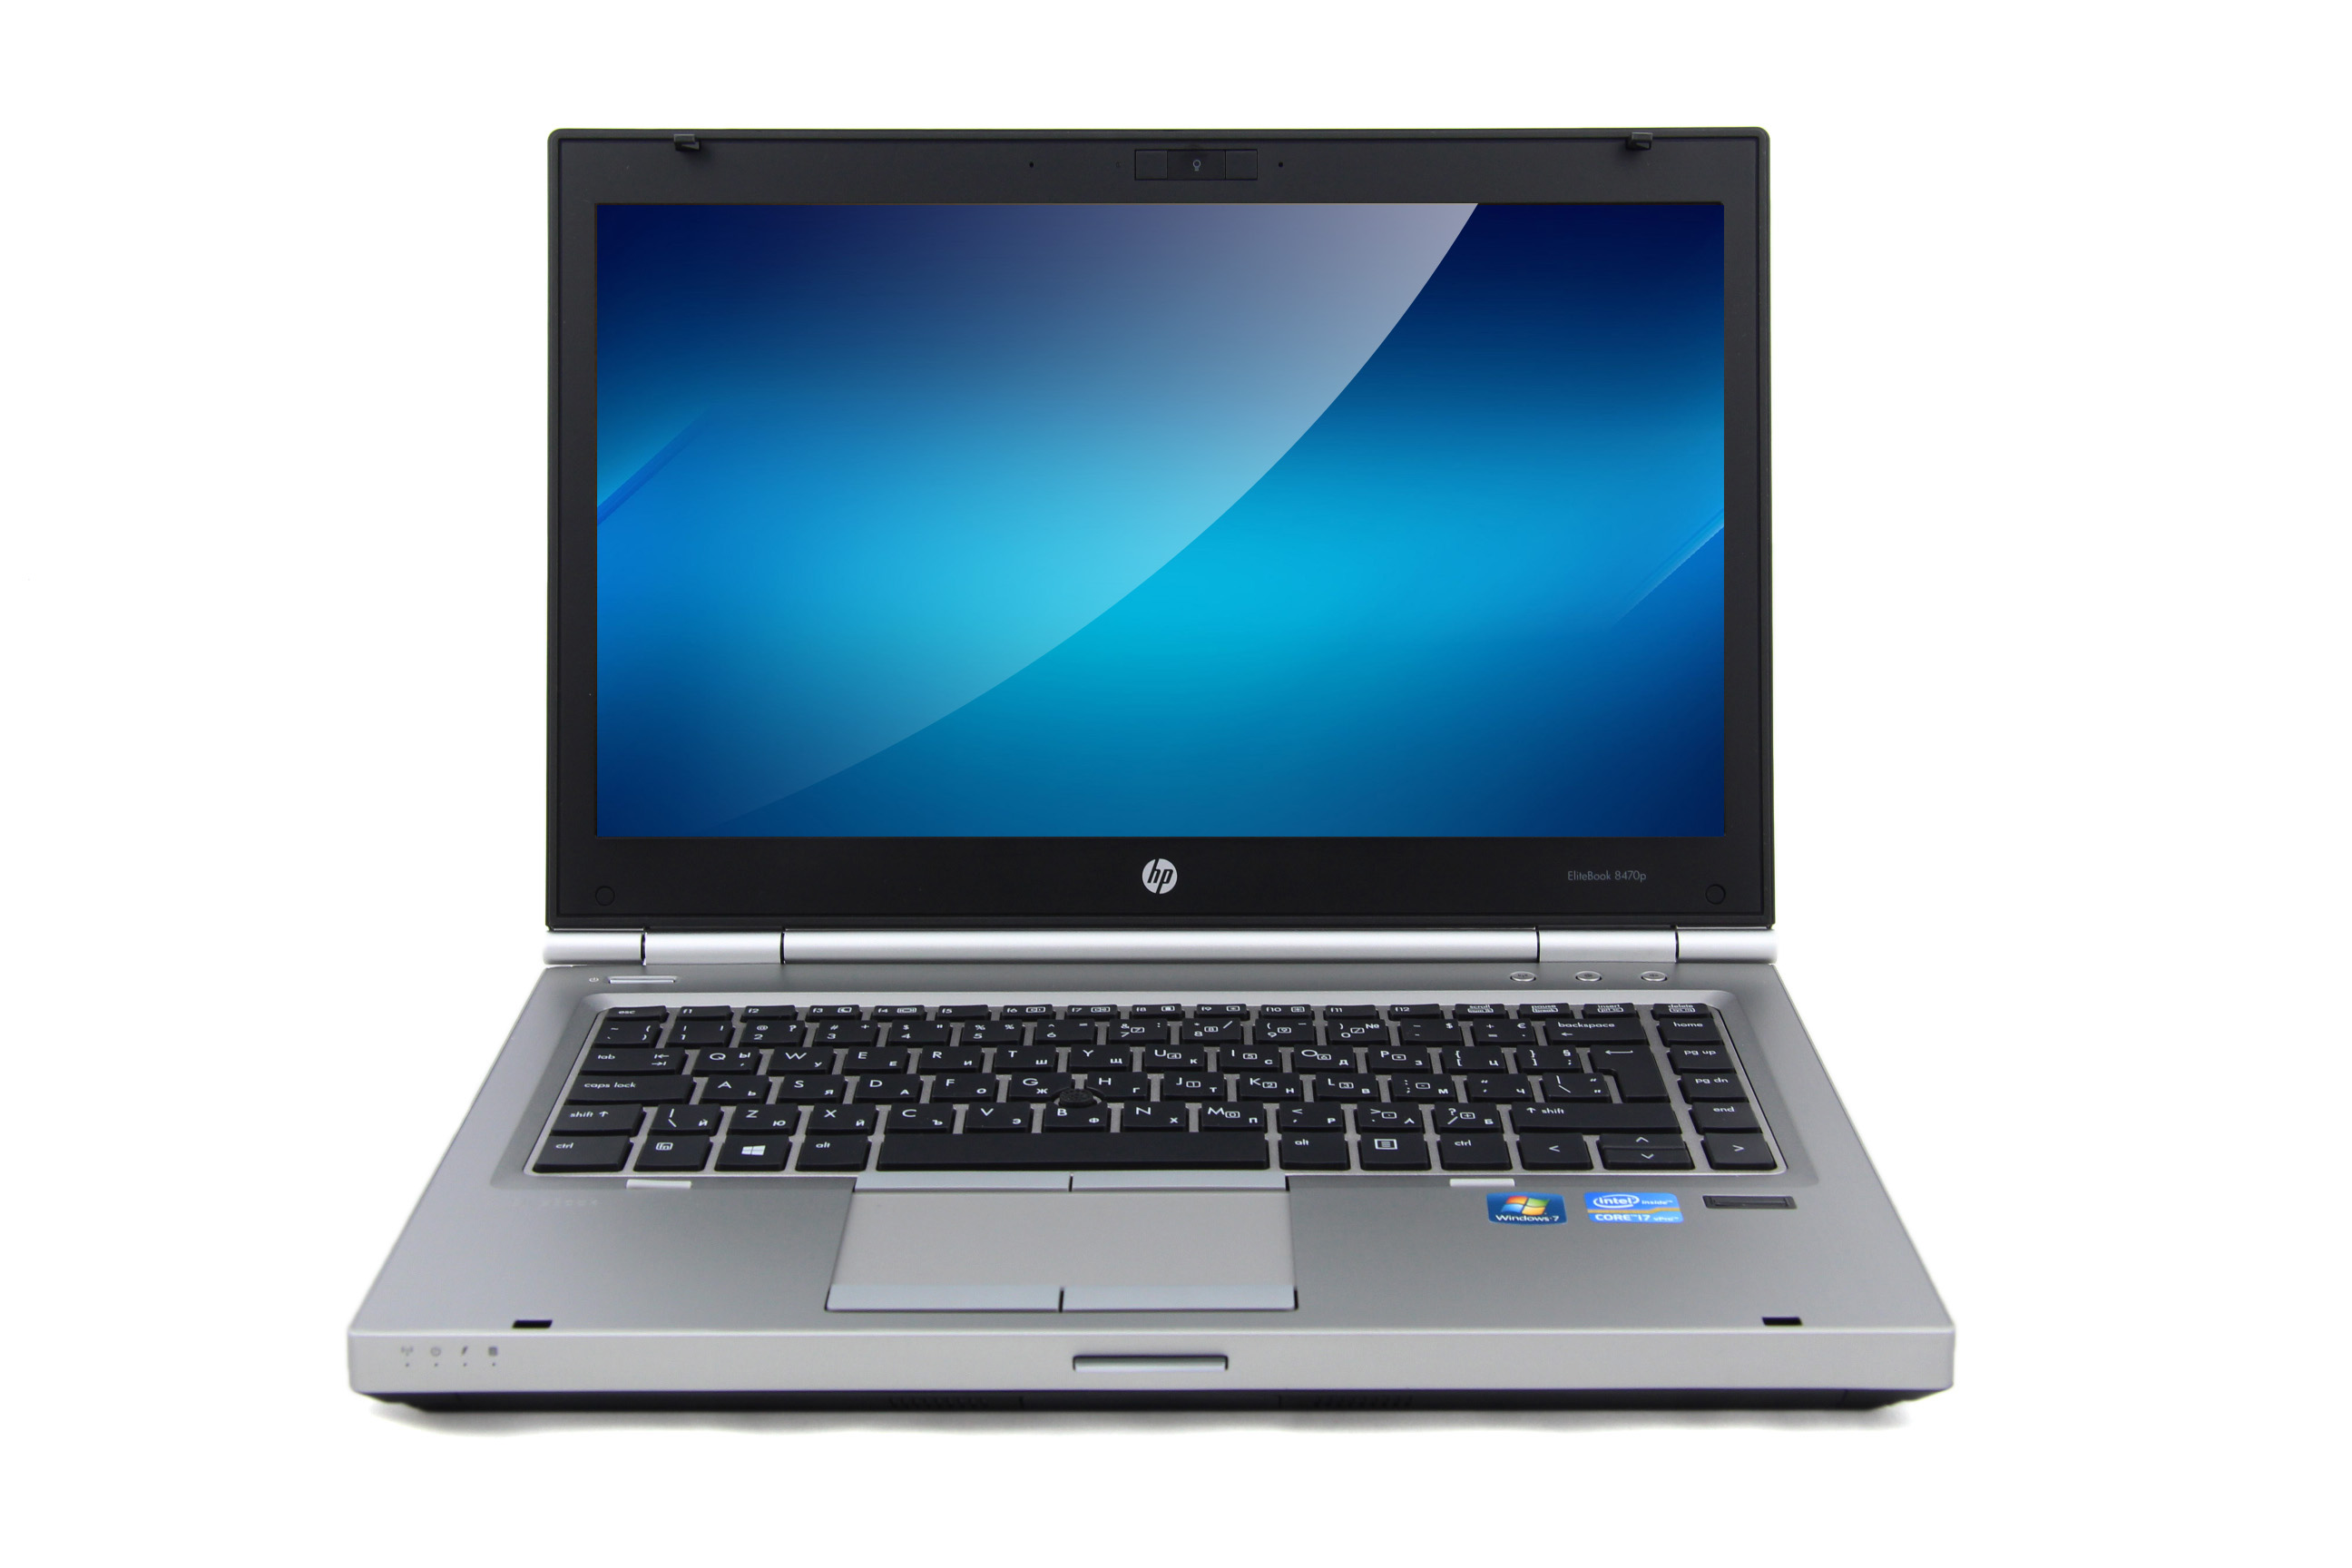 HP EliteBook 8470p 14" i7-3520M @ 2.9GHz, 8GB RAM, 320GB HDD, Windows 7 Professional - image 1 of 3